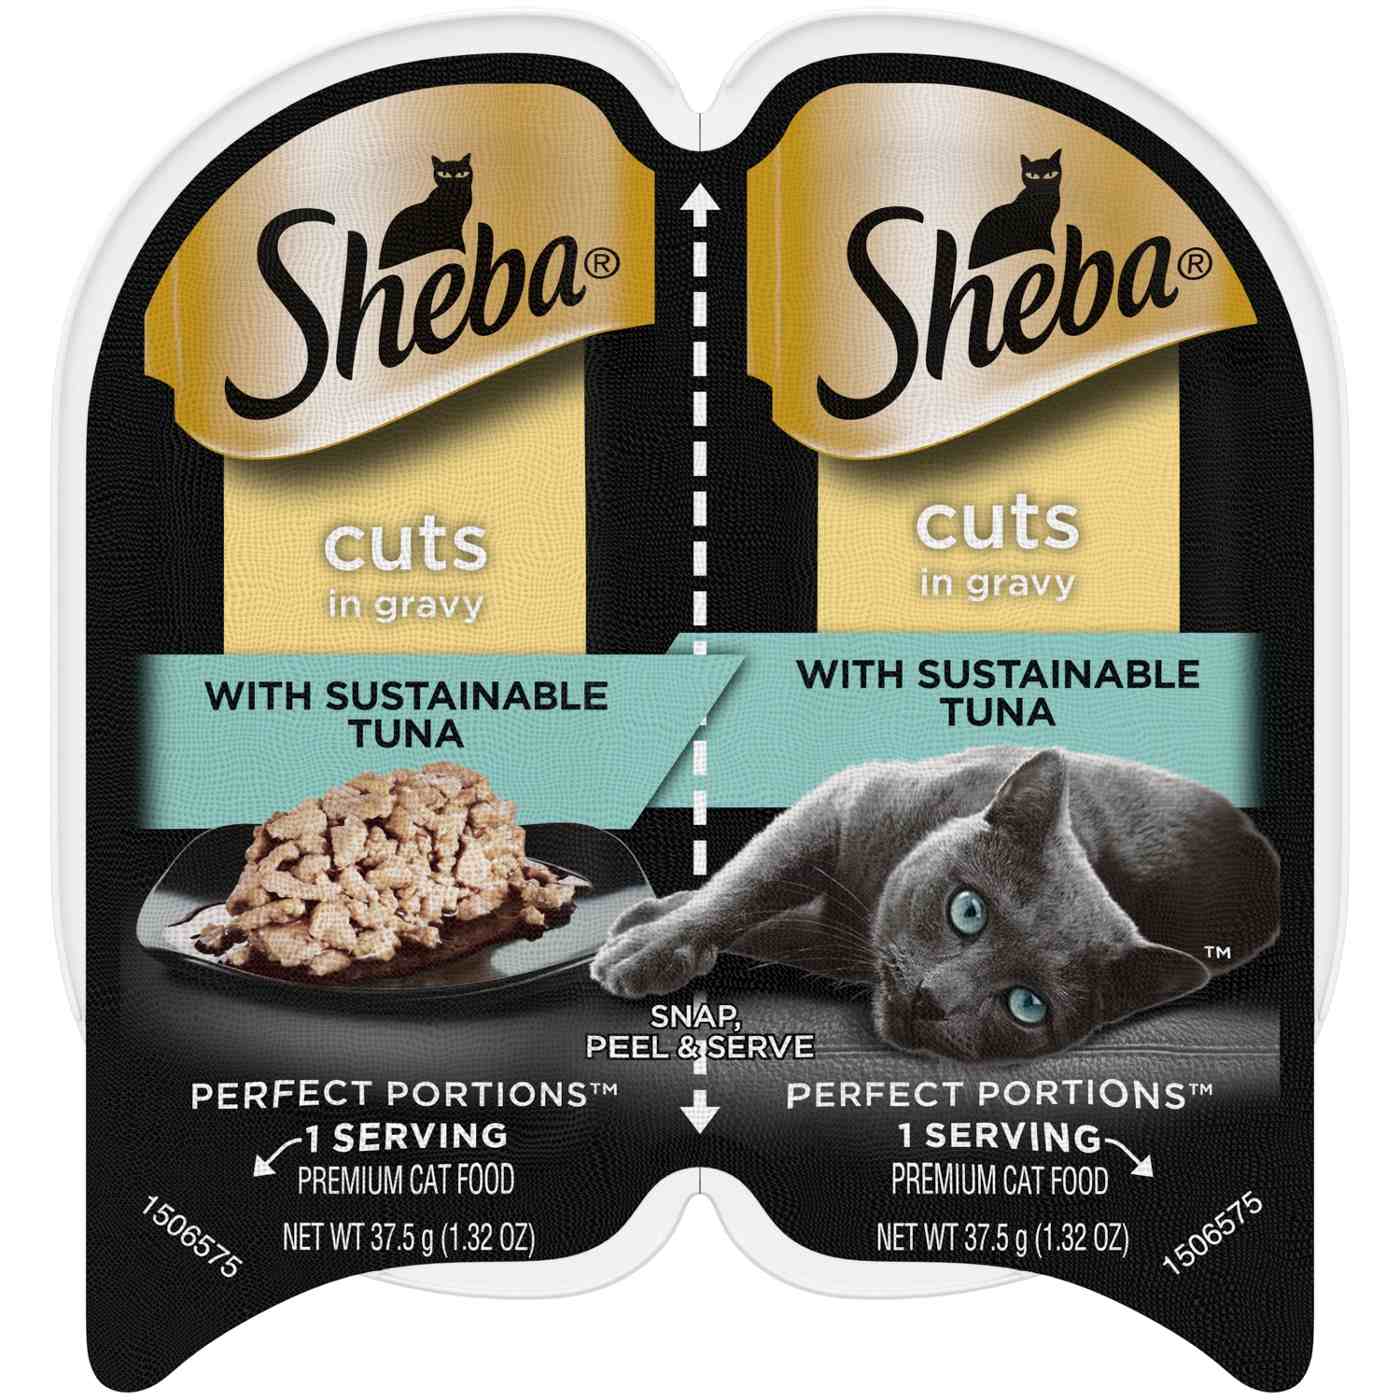 Sheba Perfect Portions Tuna Cuts Cat Food; image 1 of 4